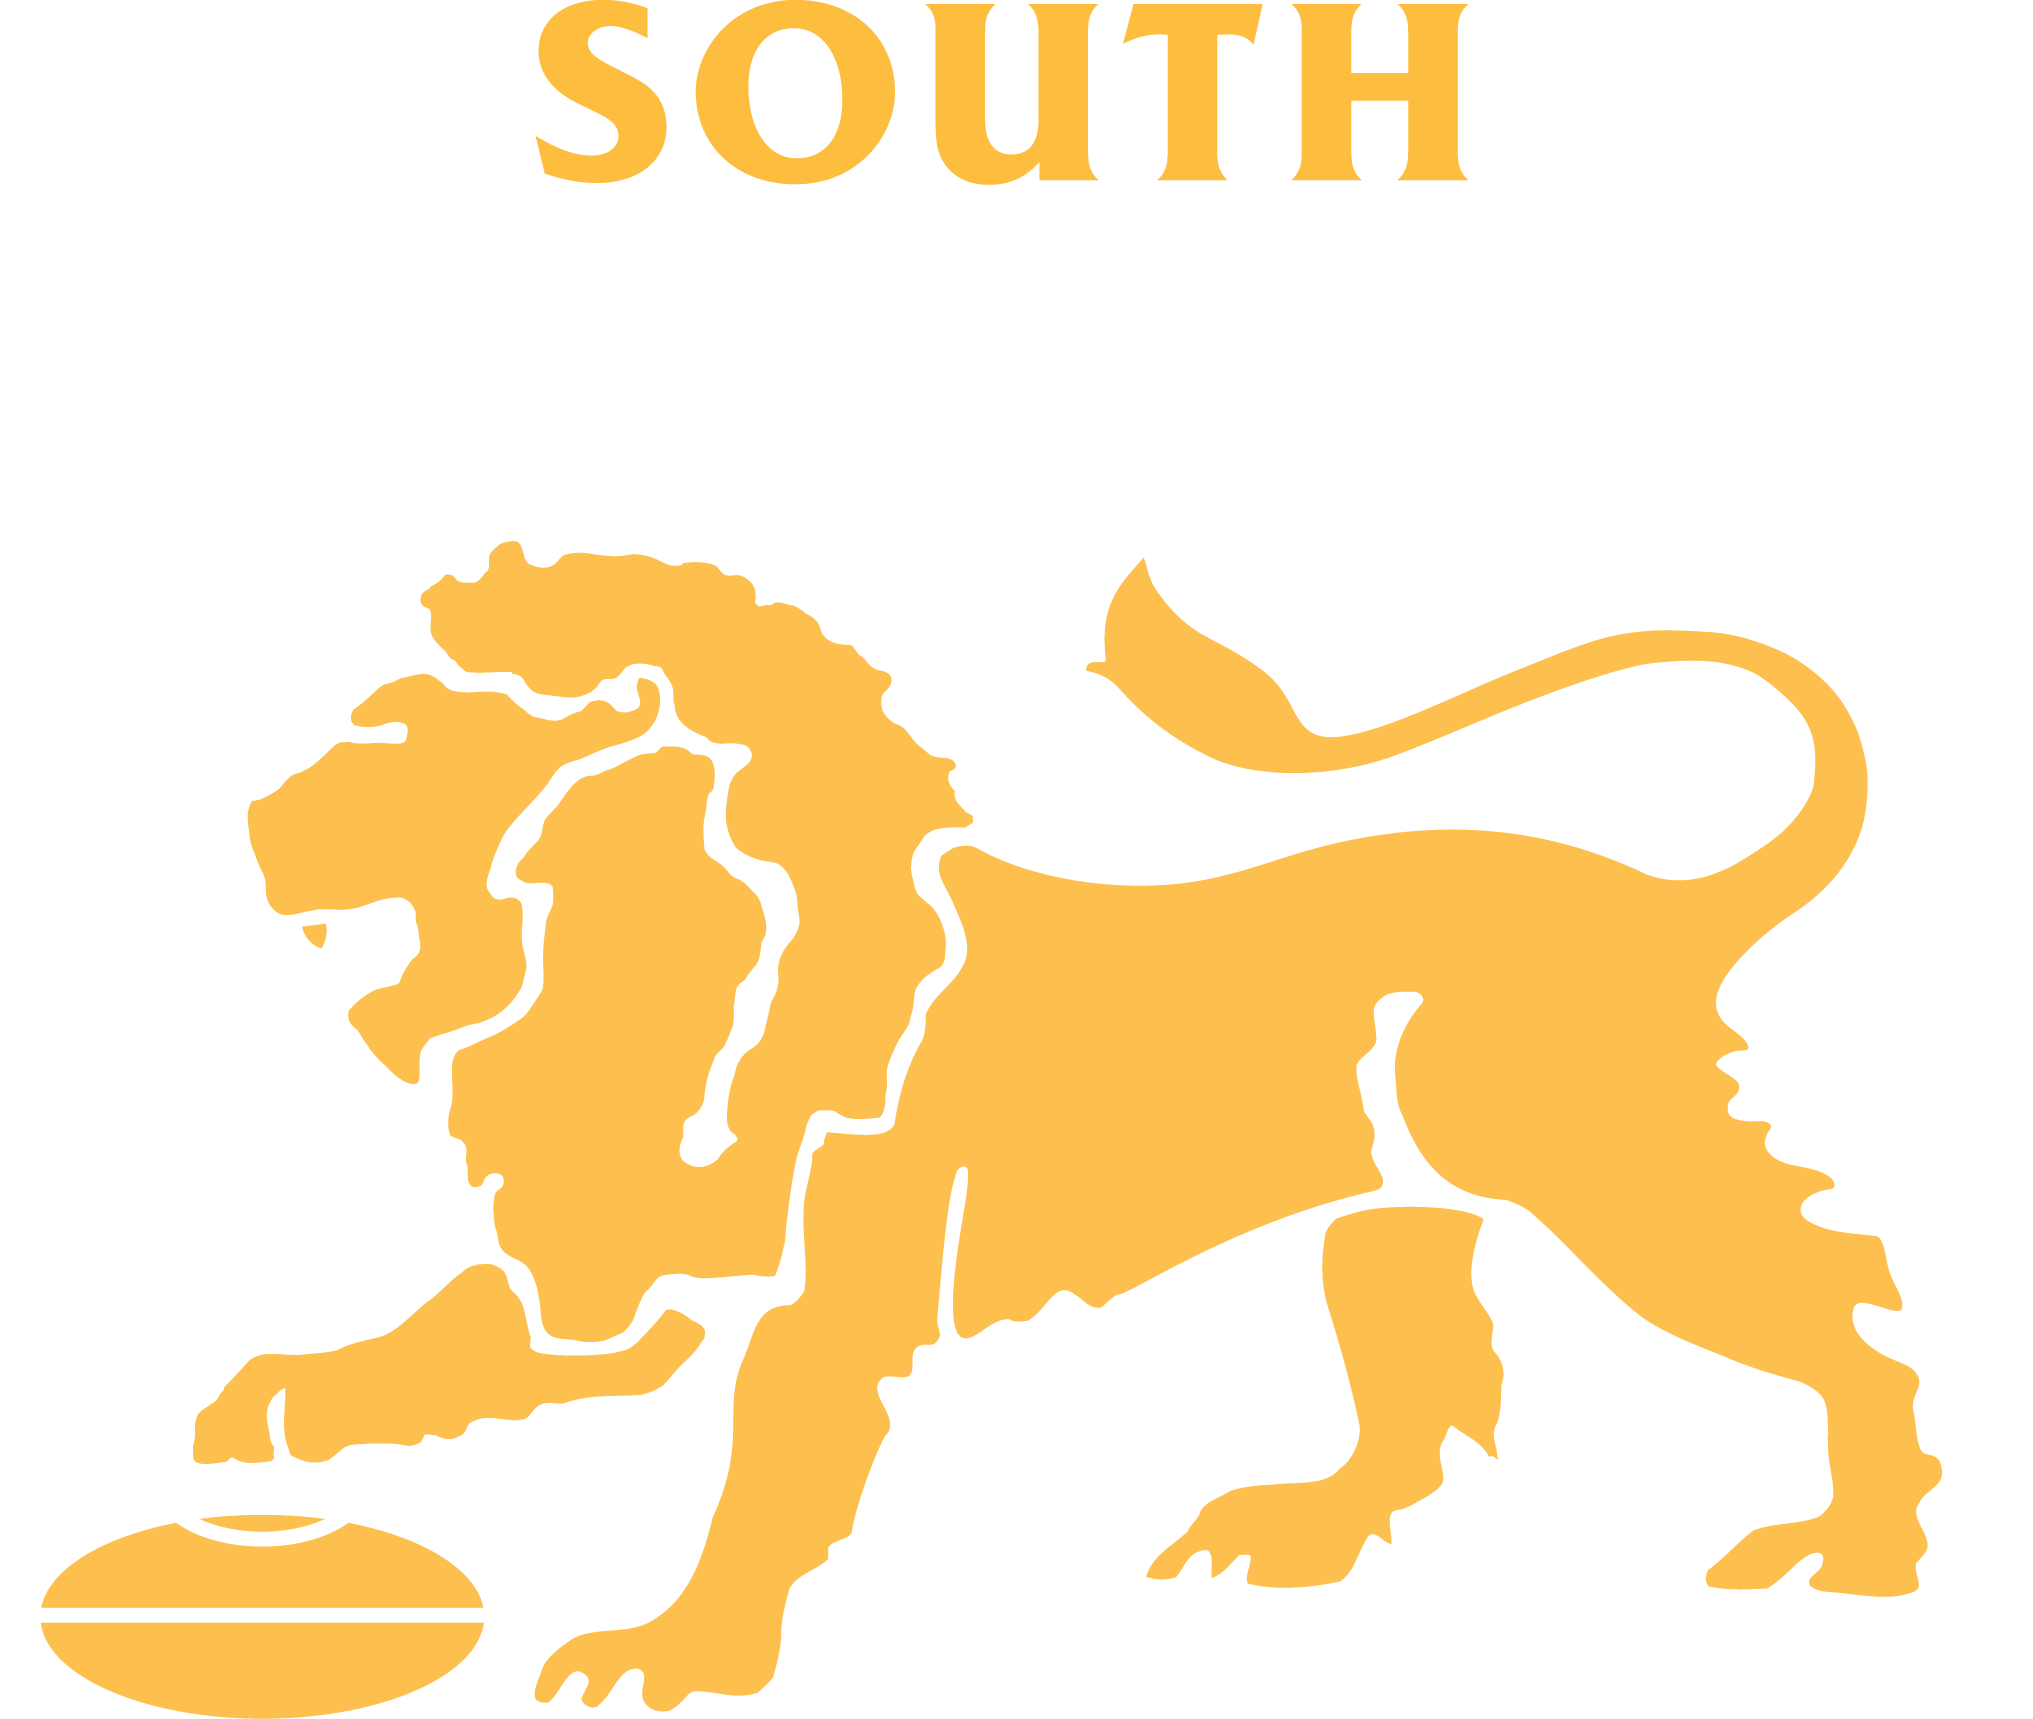 SOUTH ROVERS LOGO